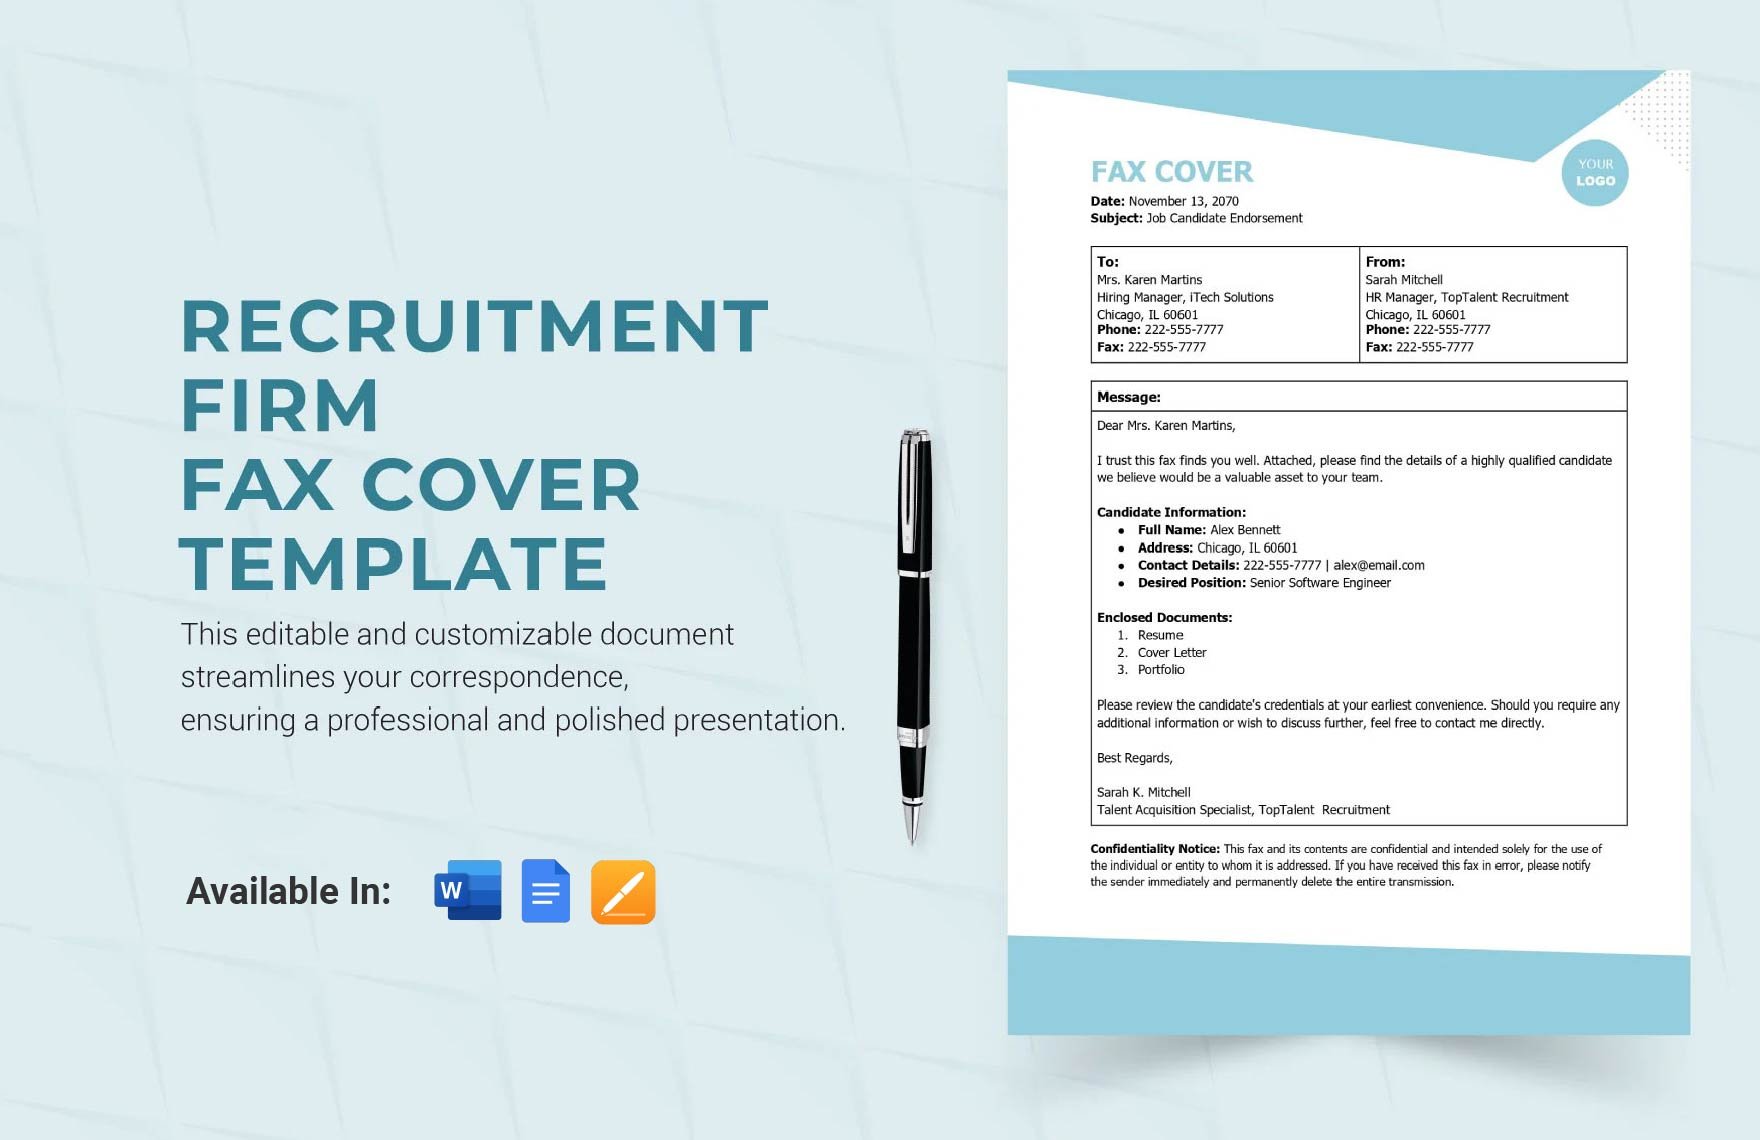 Recruitment Firm Fax Cover Template